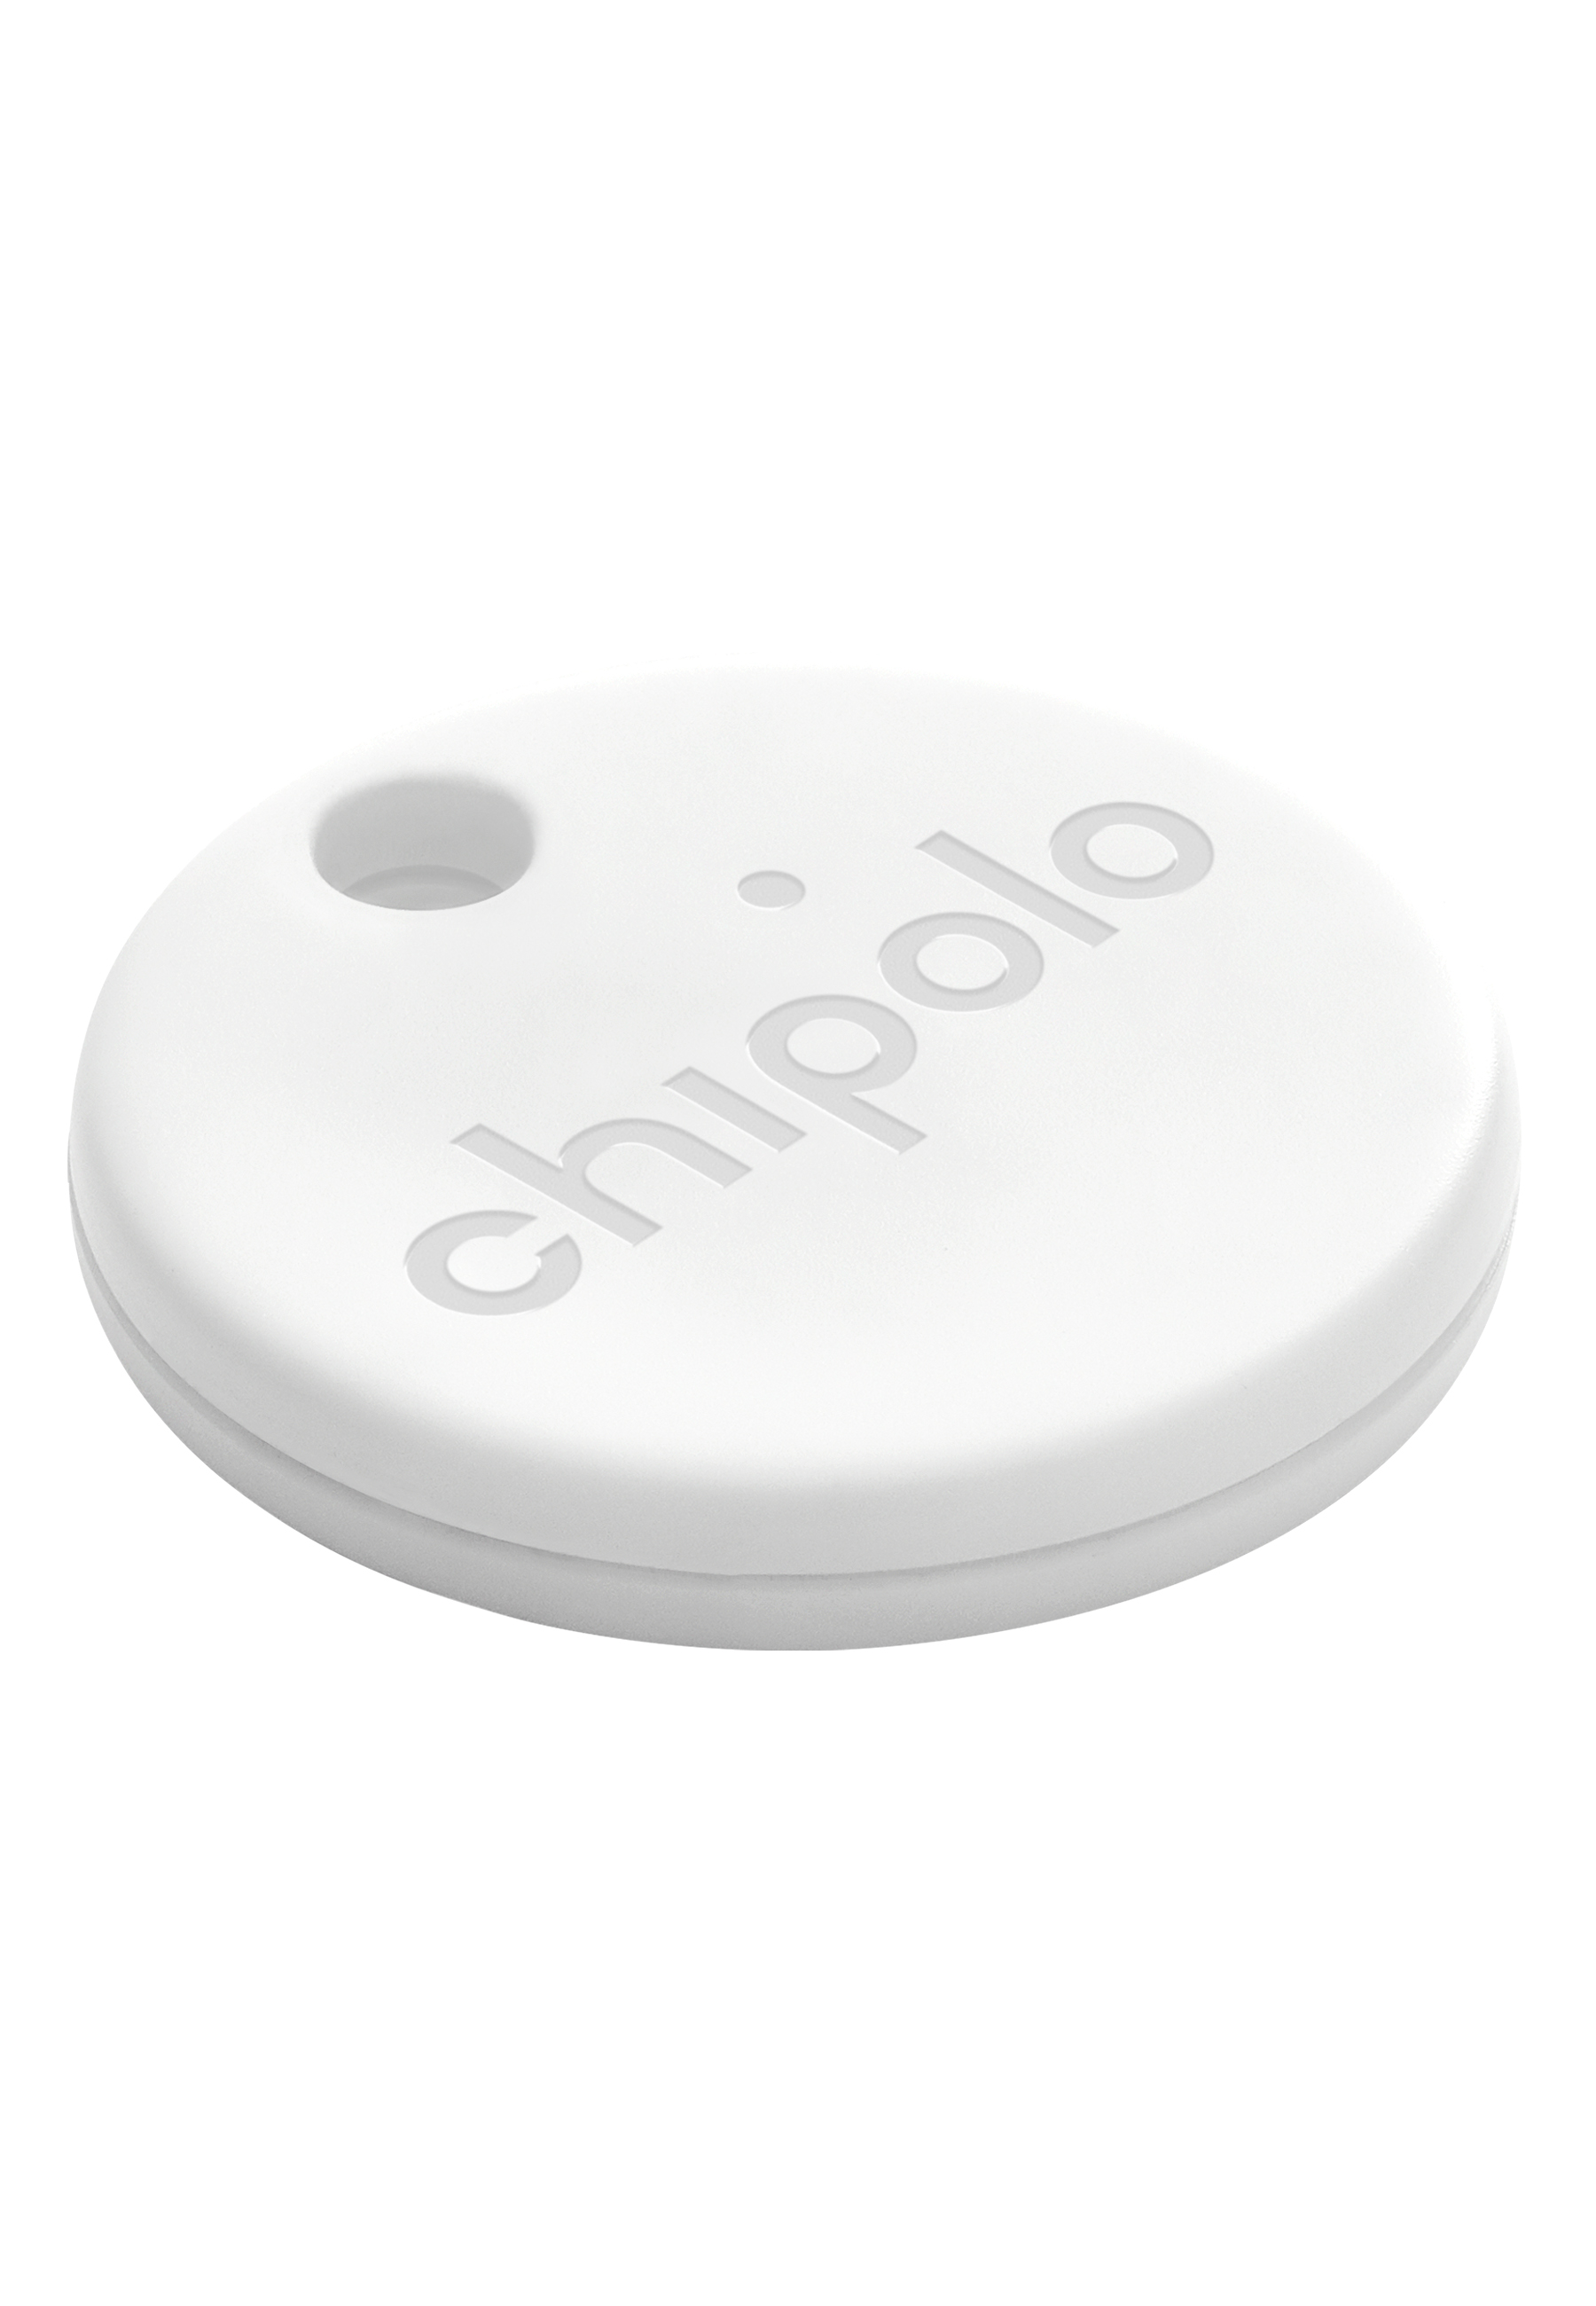 CHIPOLO Bluetooth -WE-R Tracker